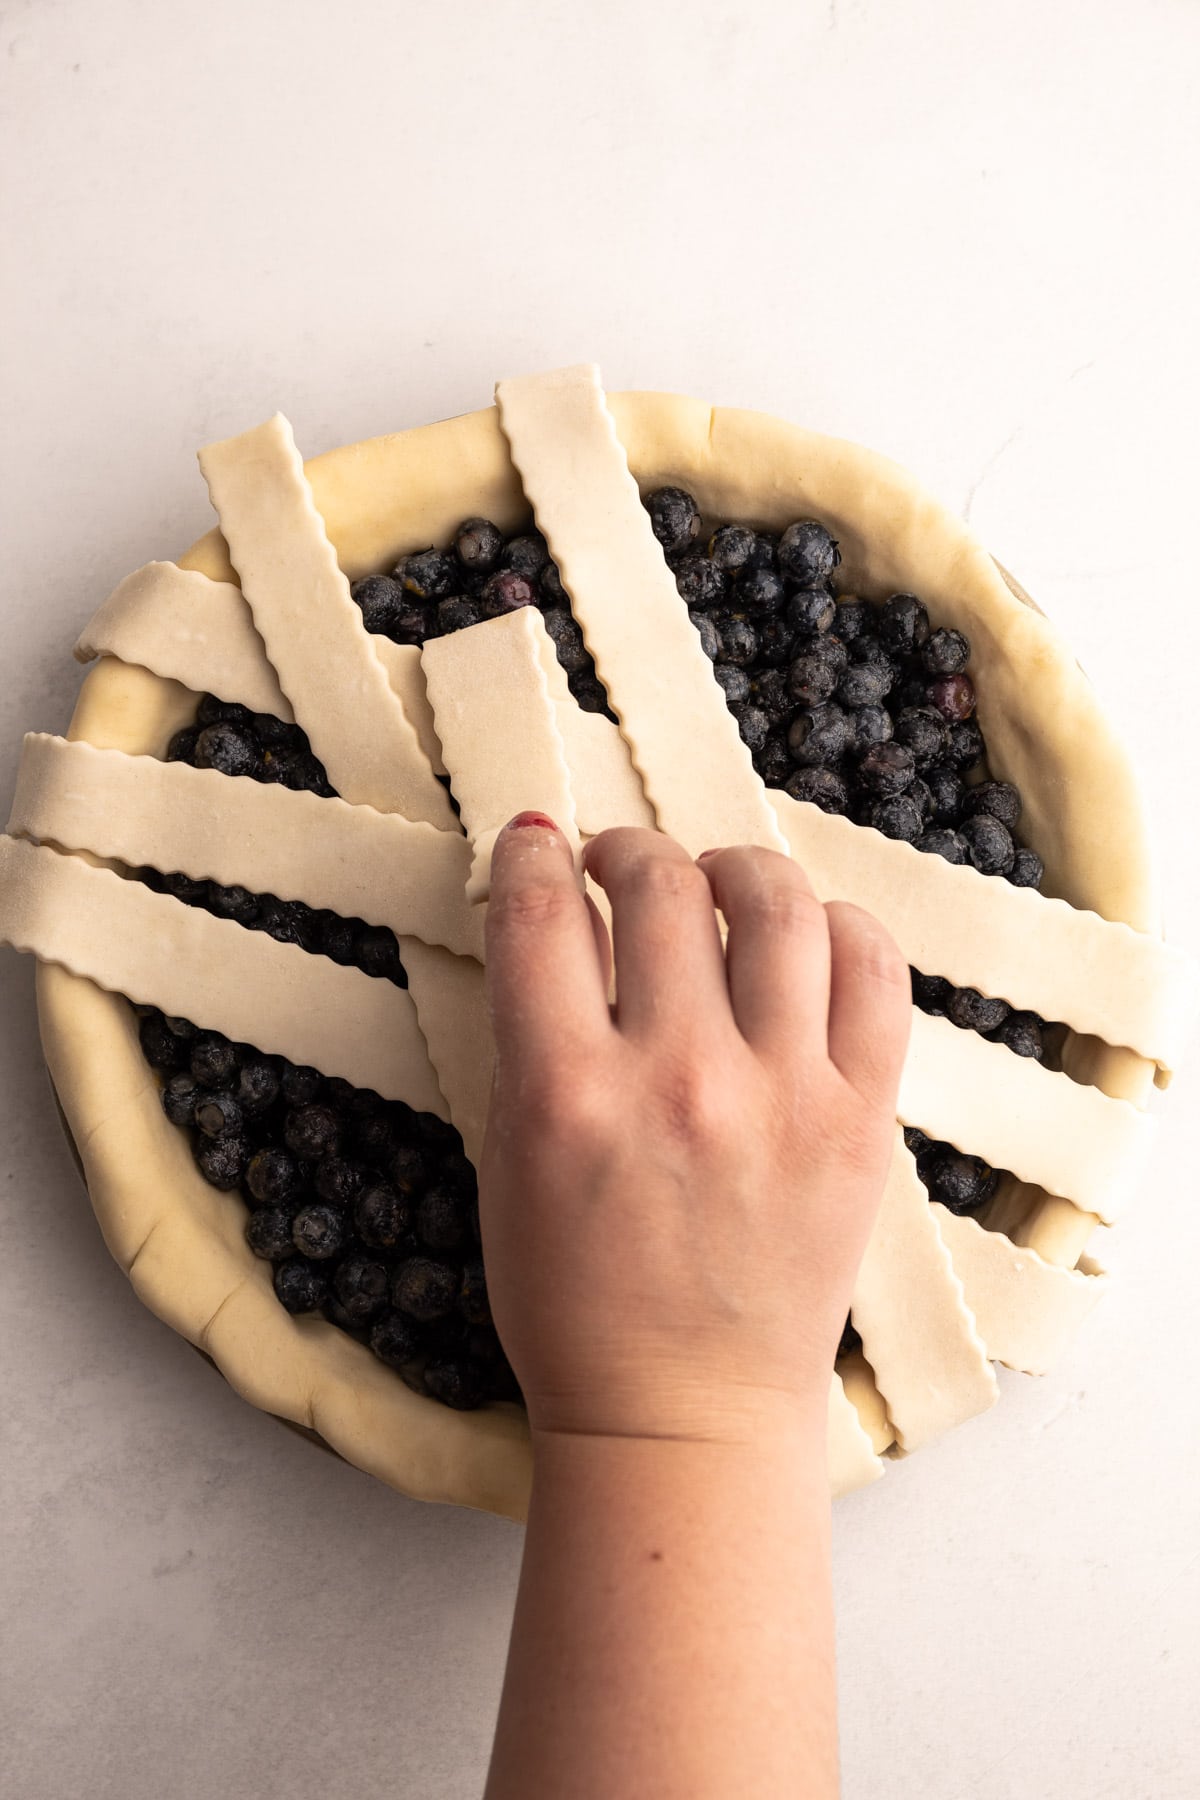 Putting a lattice on a blueberry pie crust.